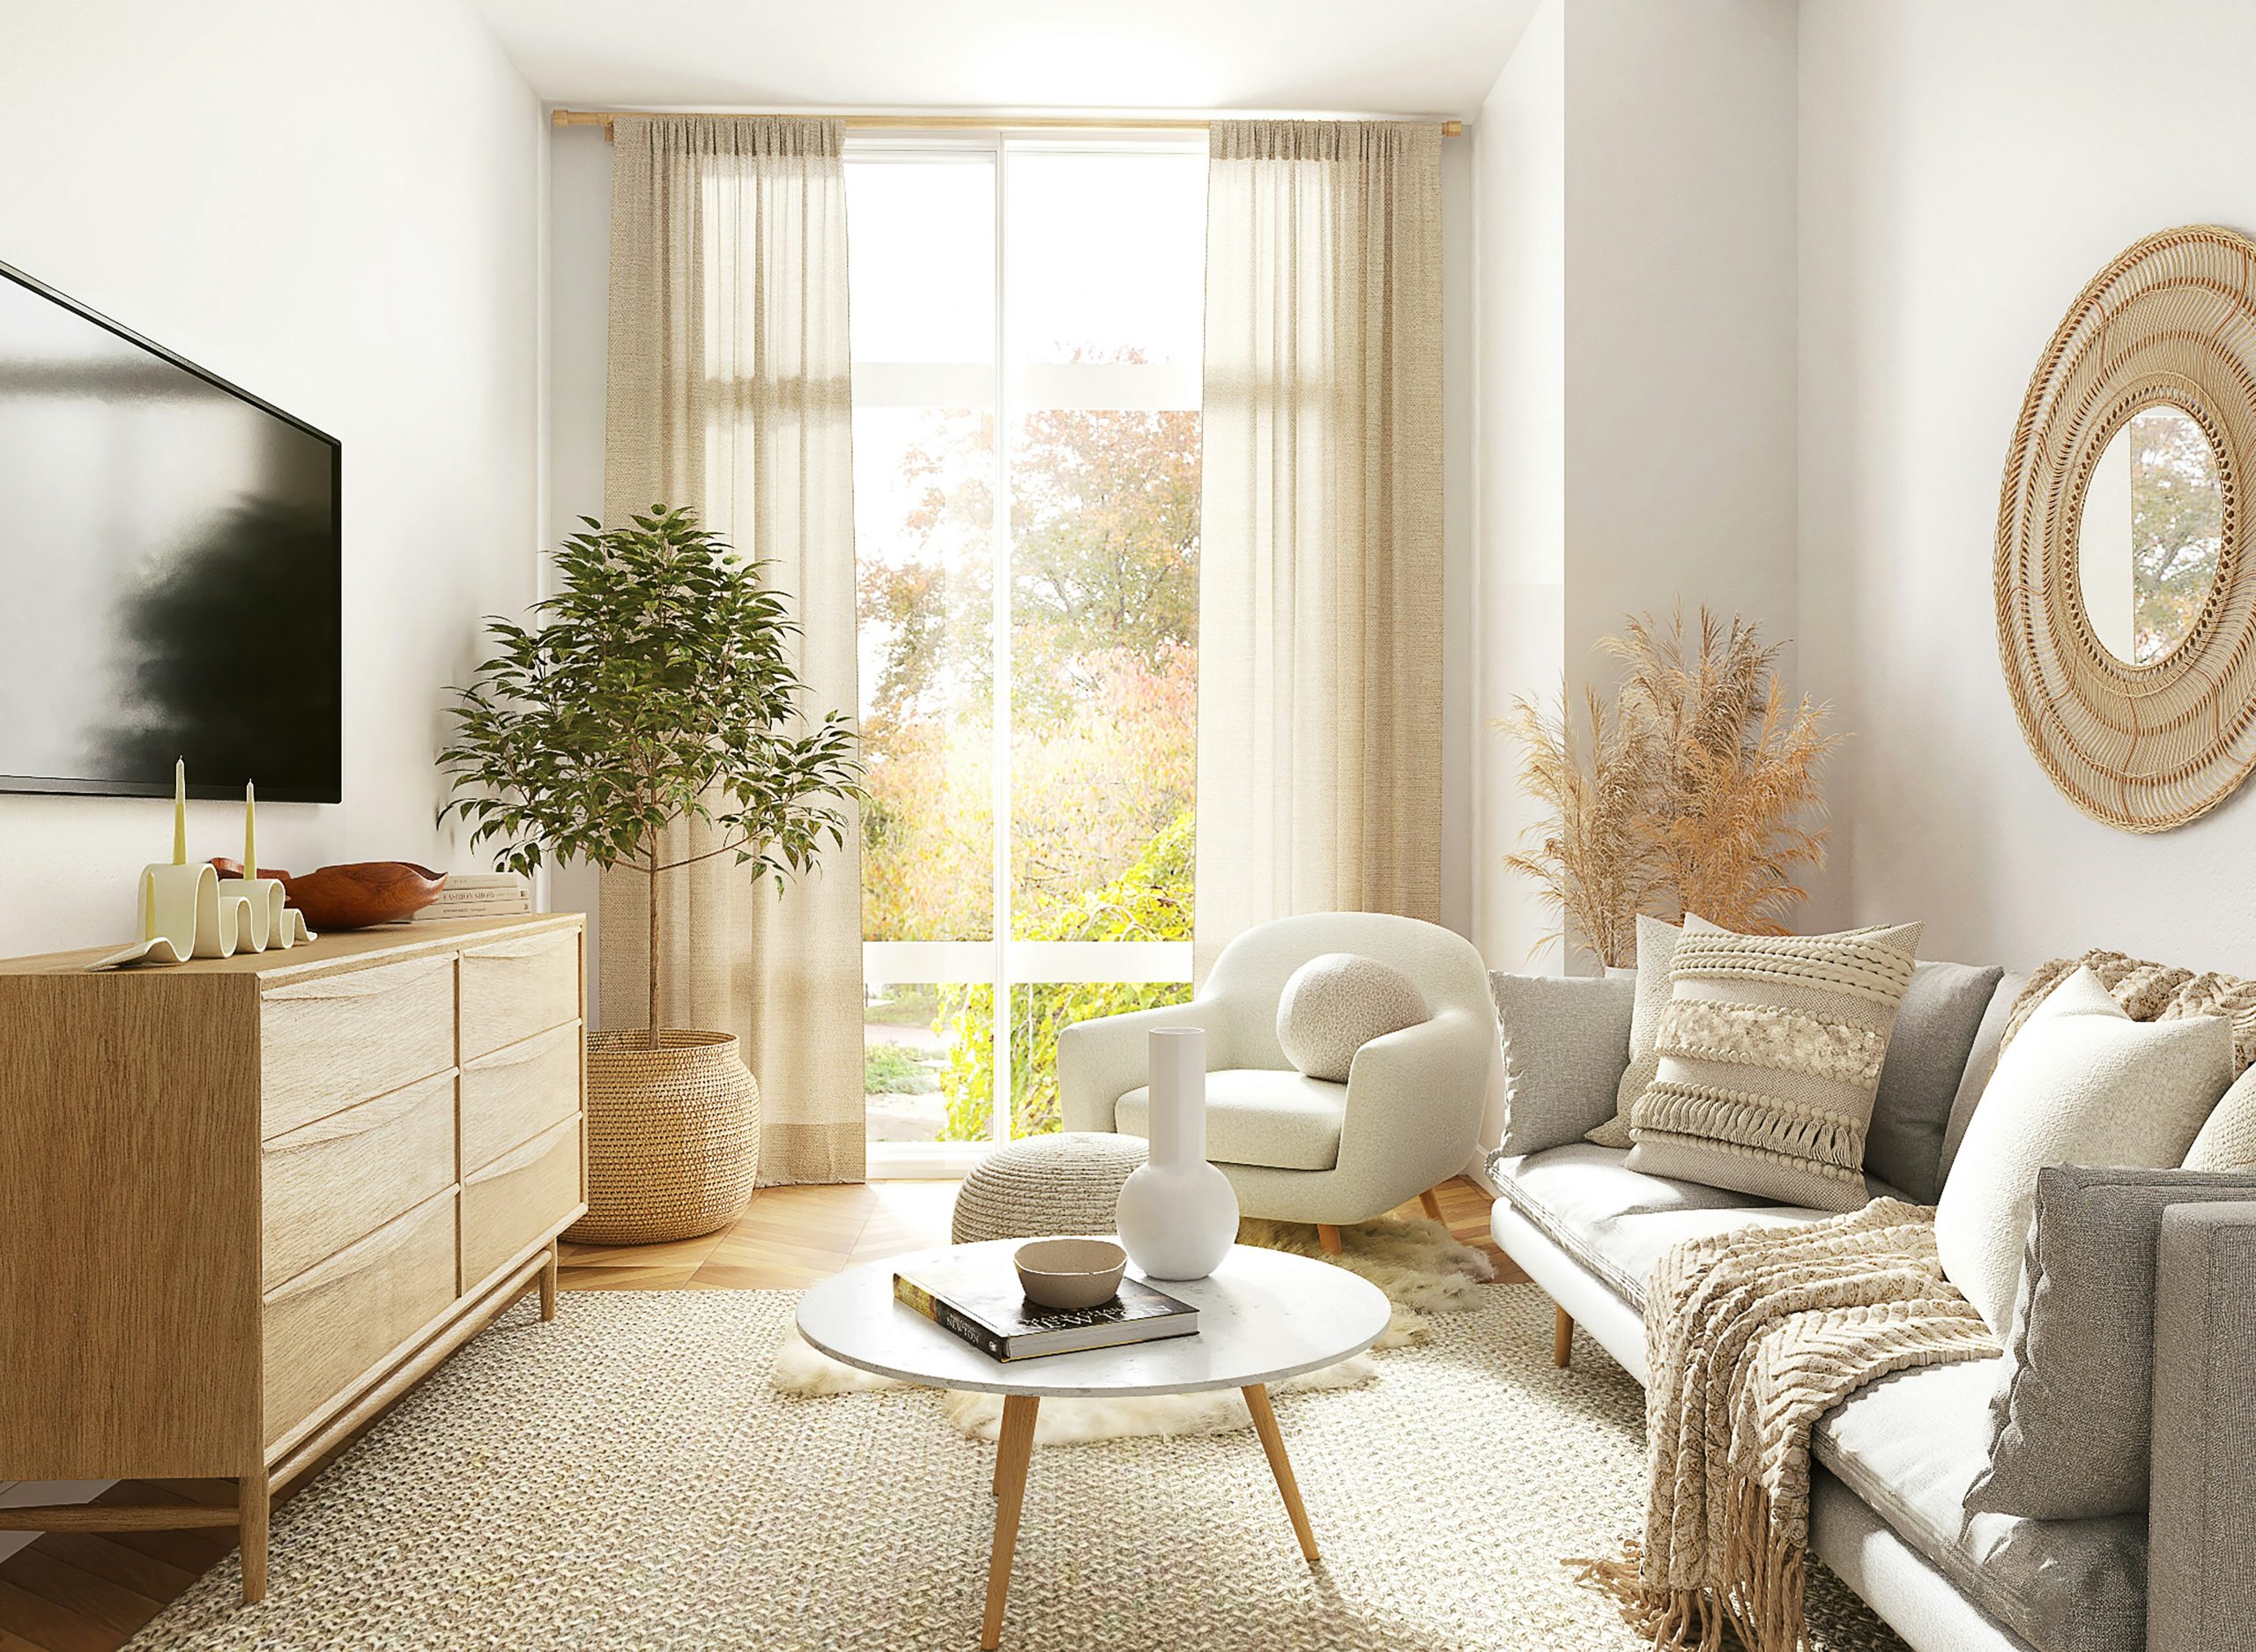 Cozy, decluttered living room